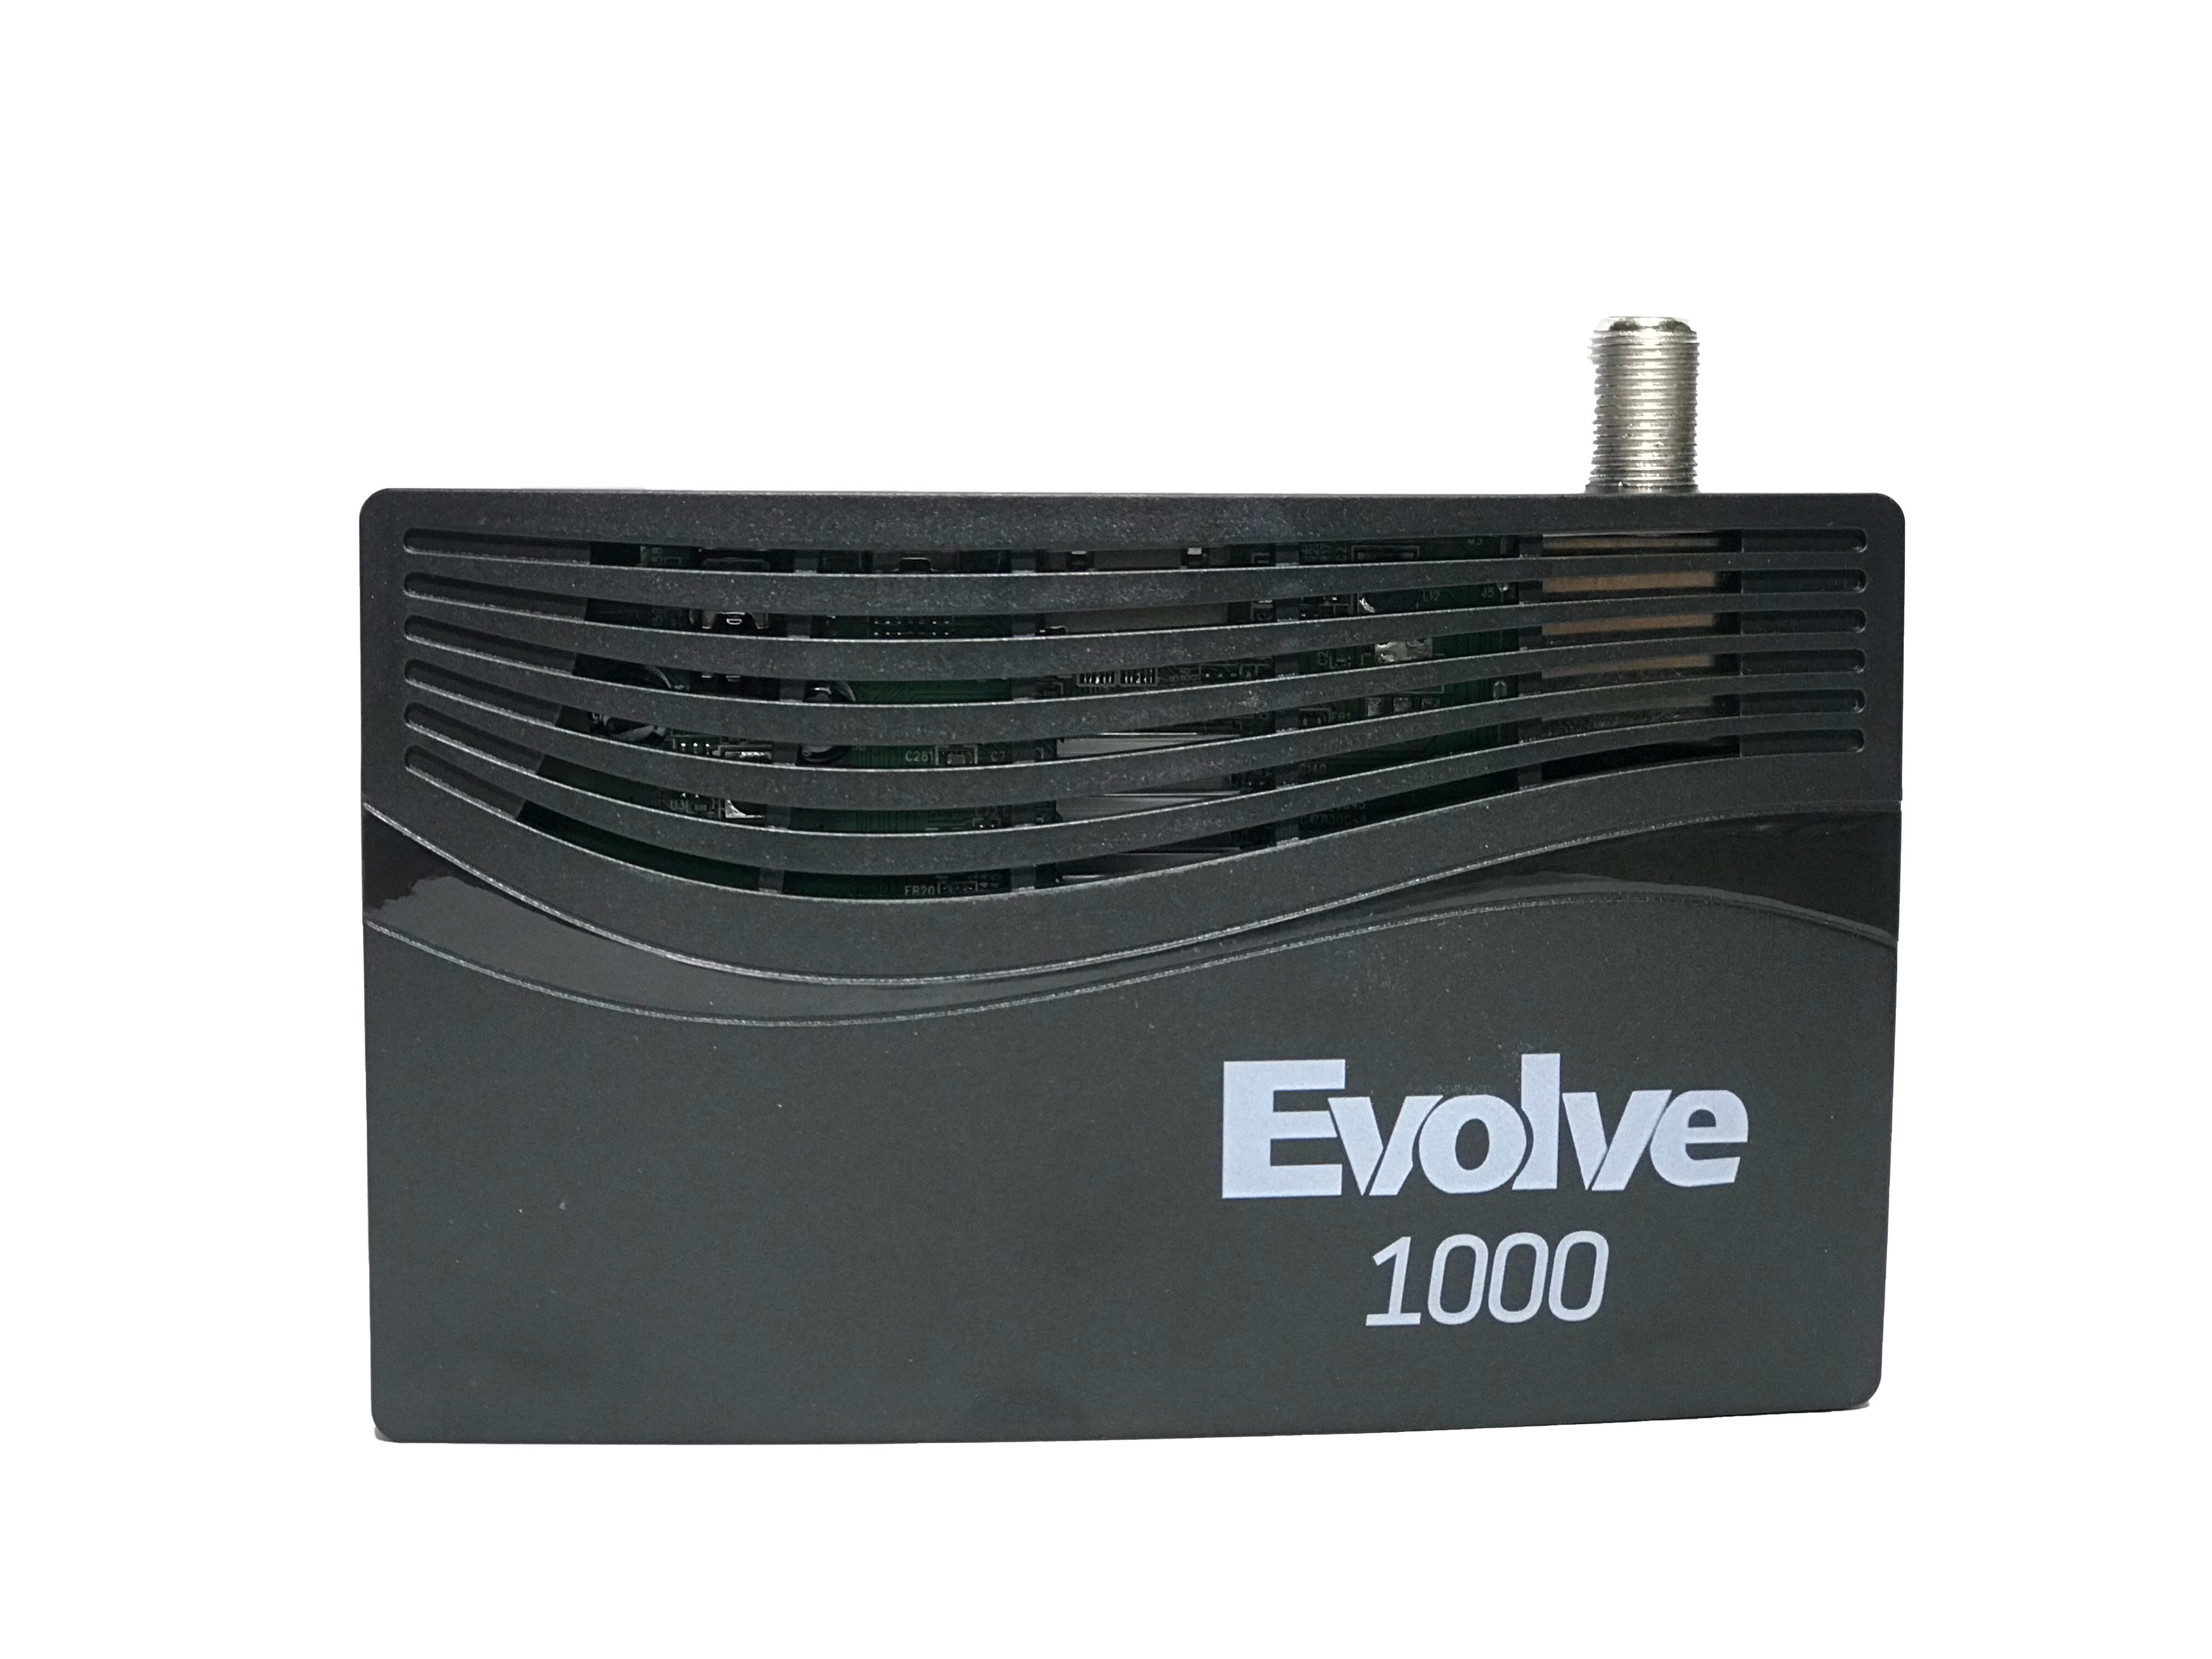 Evolve Full HD Satellite Receiver Mini - Black - Evolve 1000